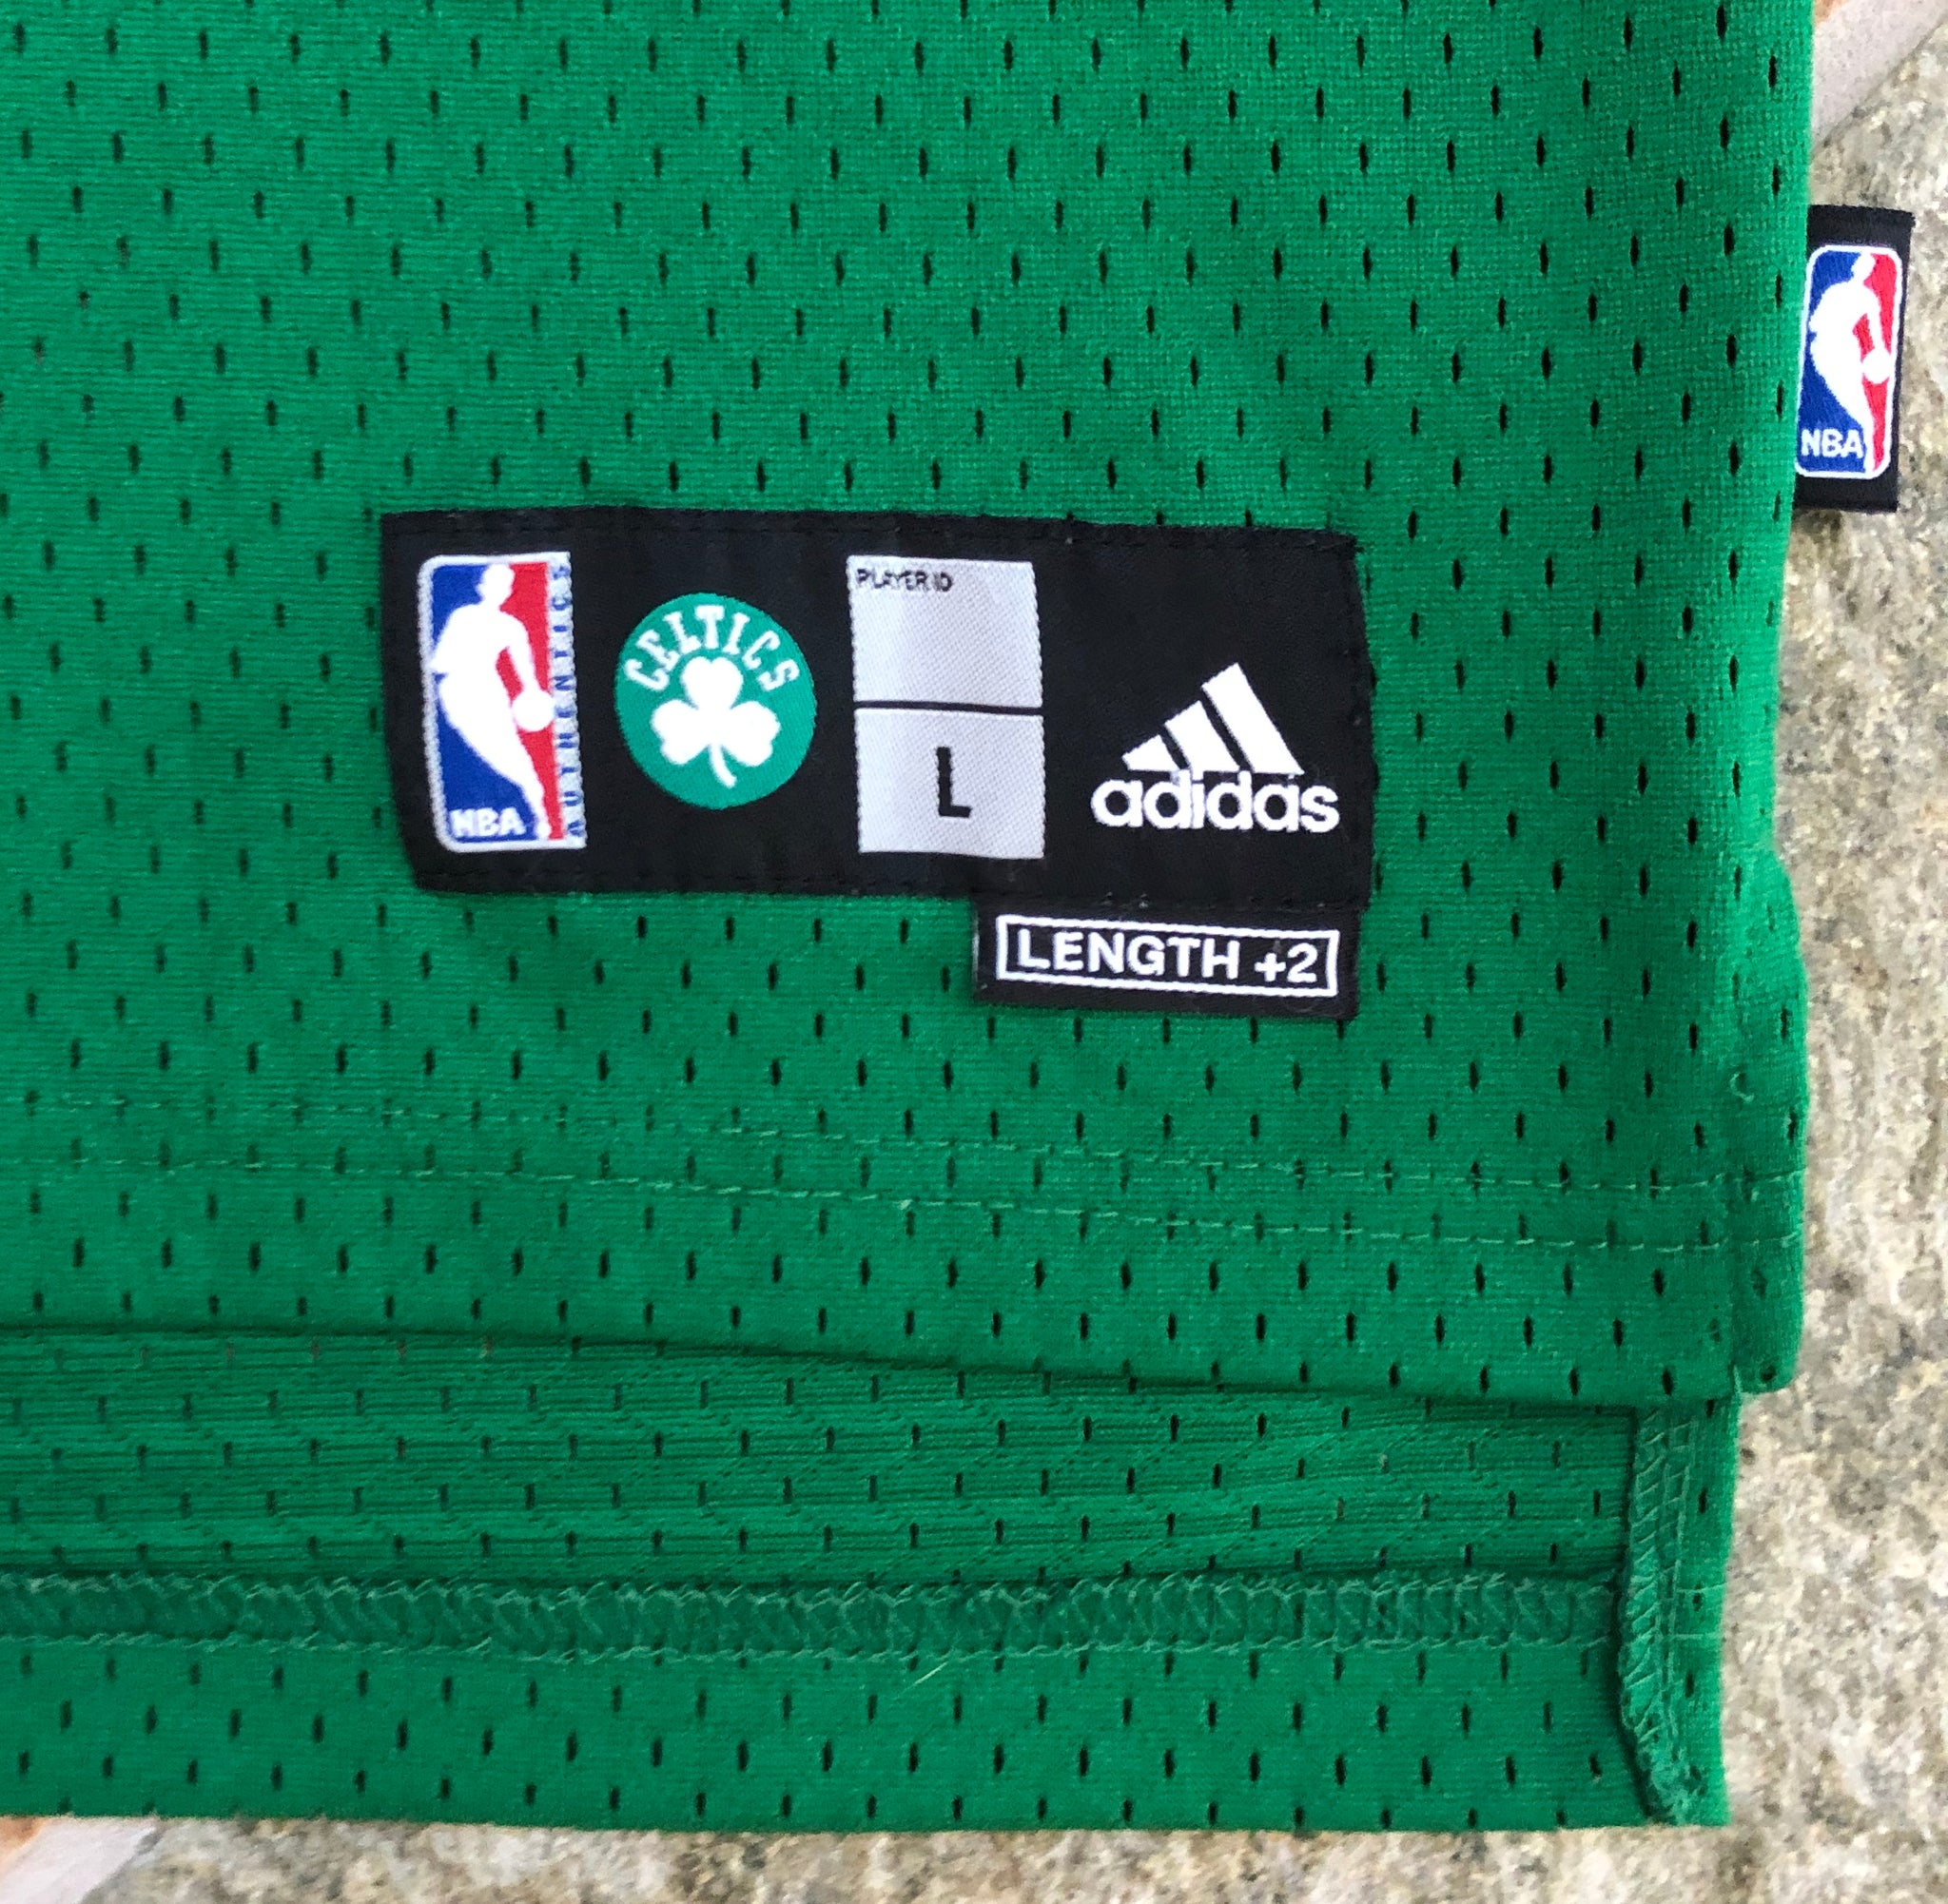 Boston Celtics #5 Kevin Garnett Basketball NBA Shirt Jersey Adidas size XL